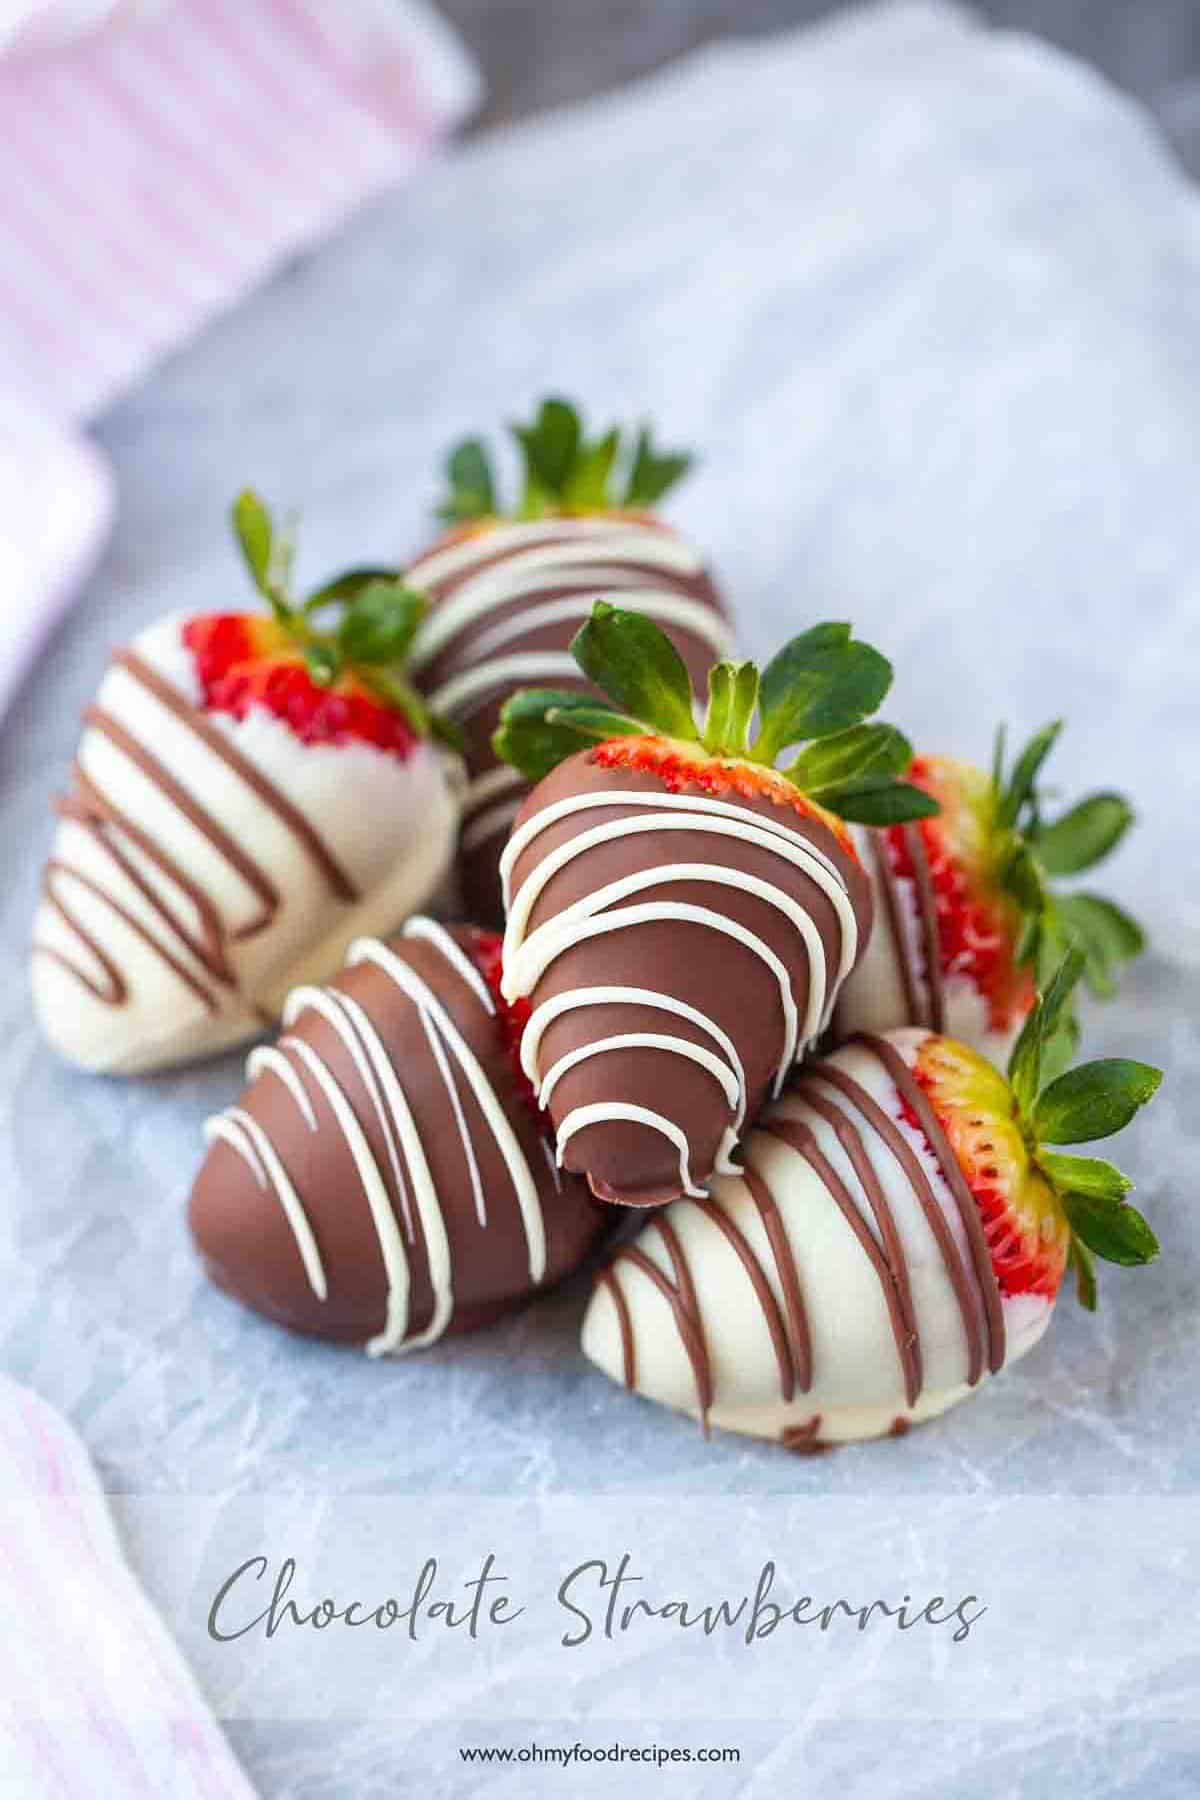 15. Chocolate Dipped Strawberries_